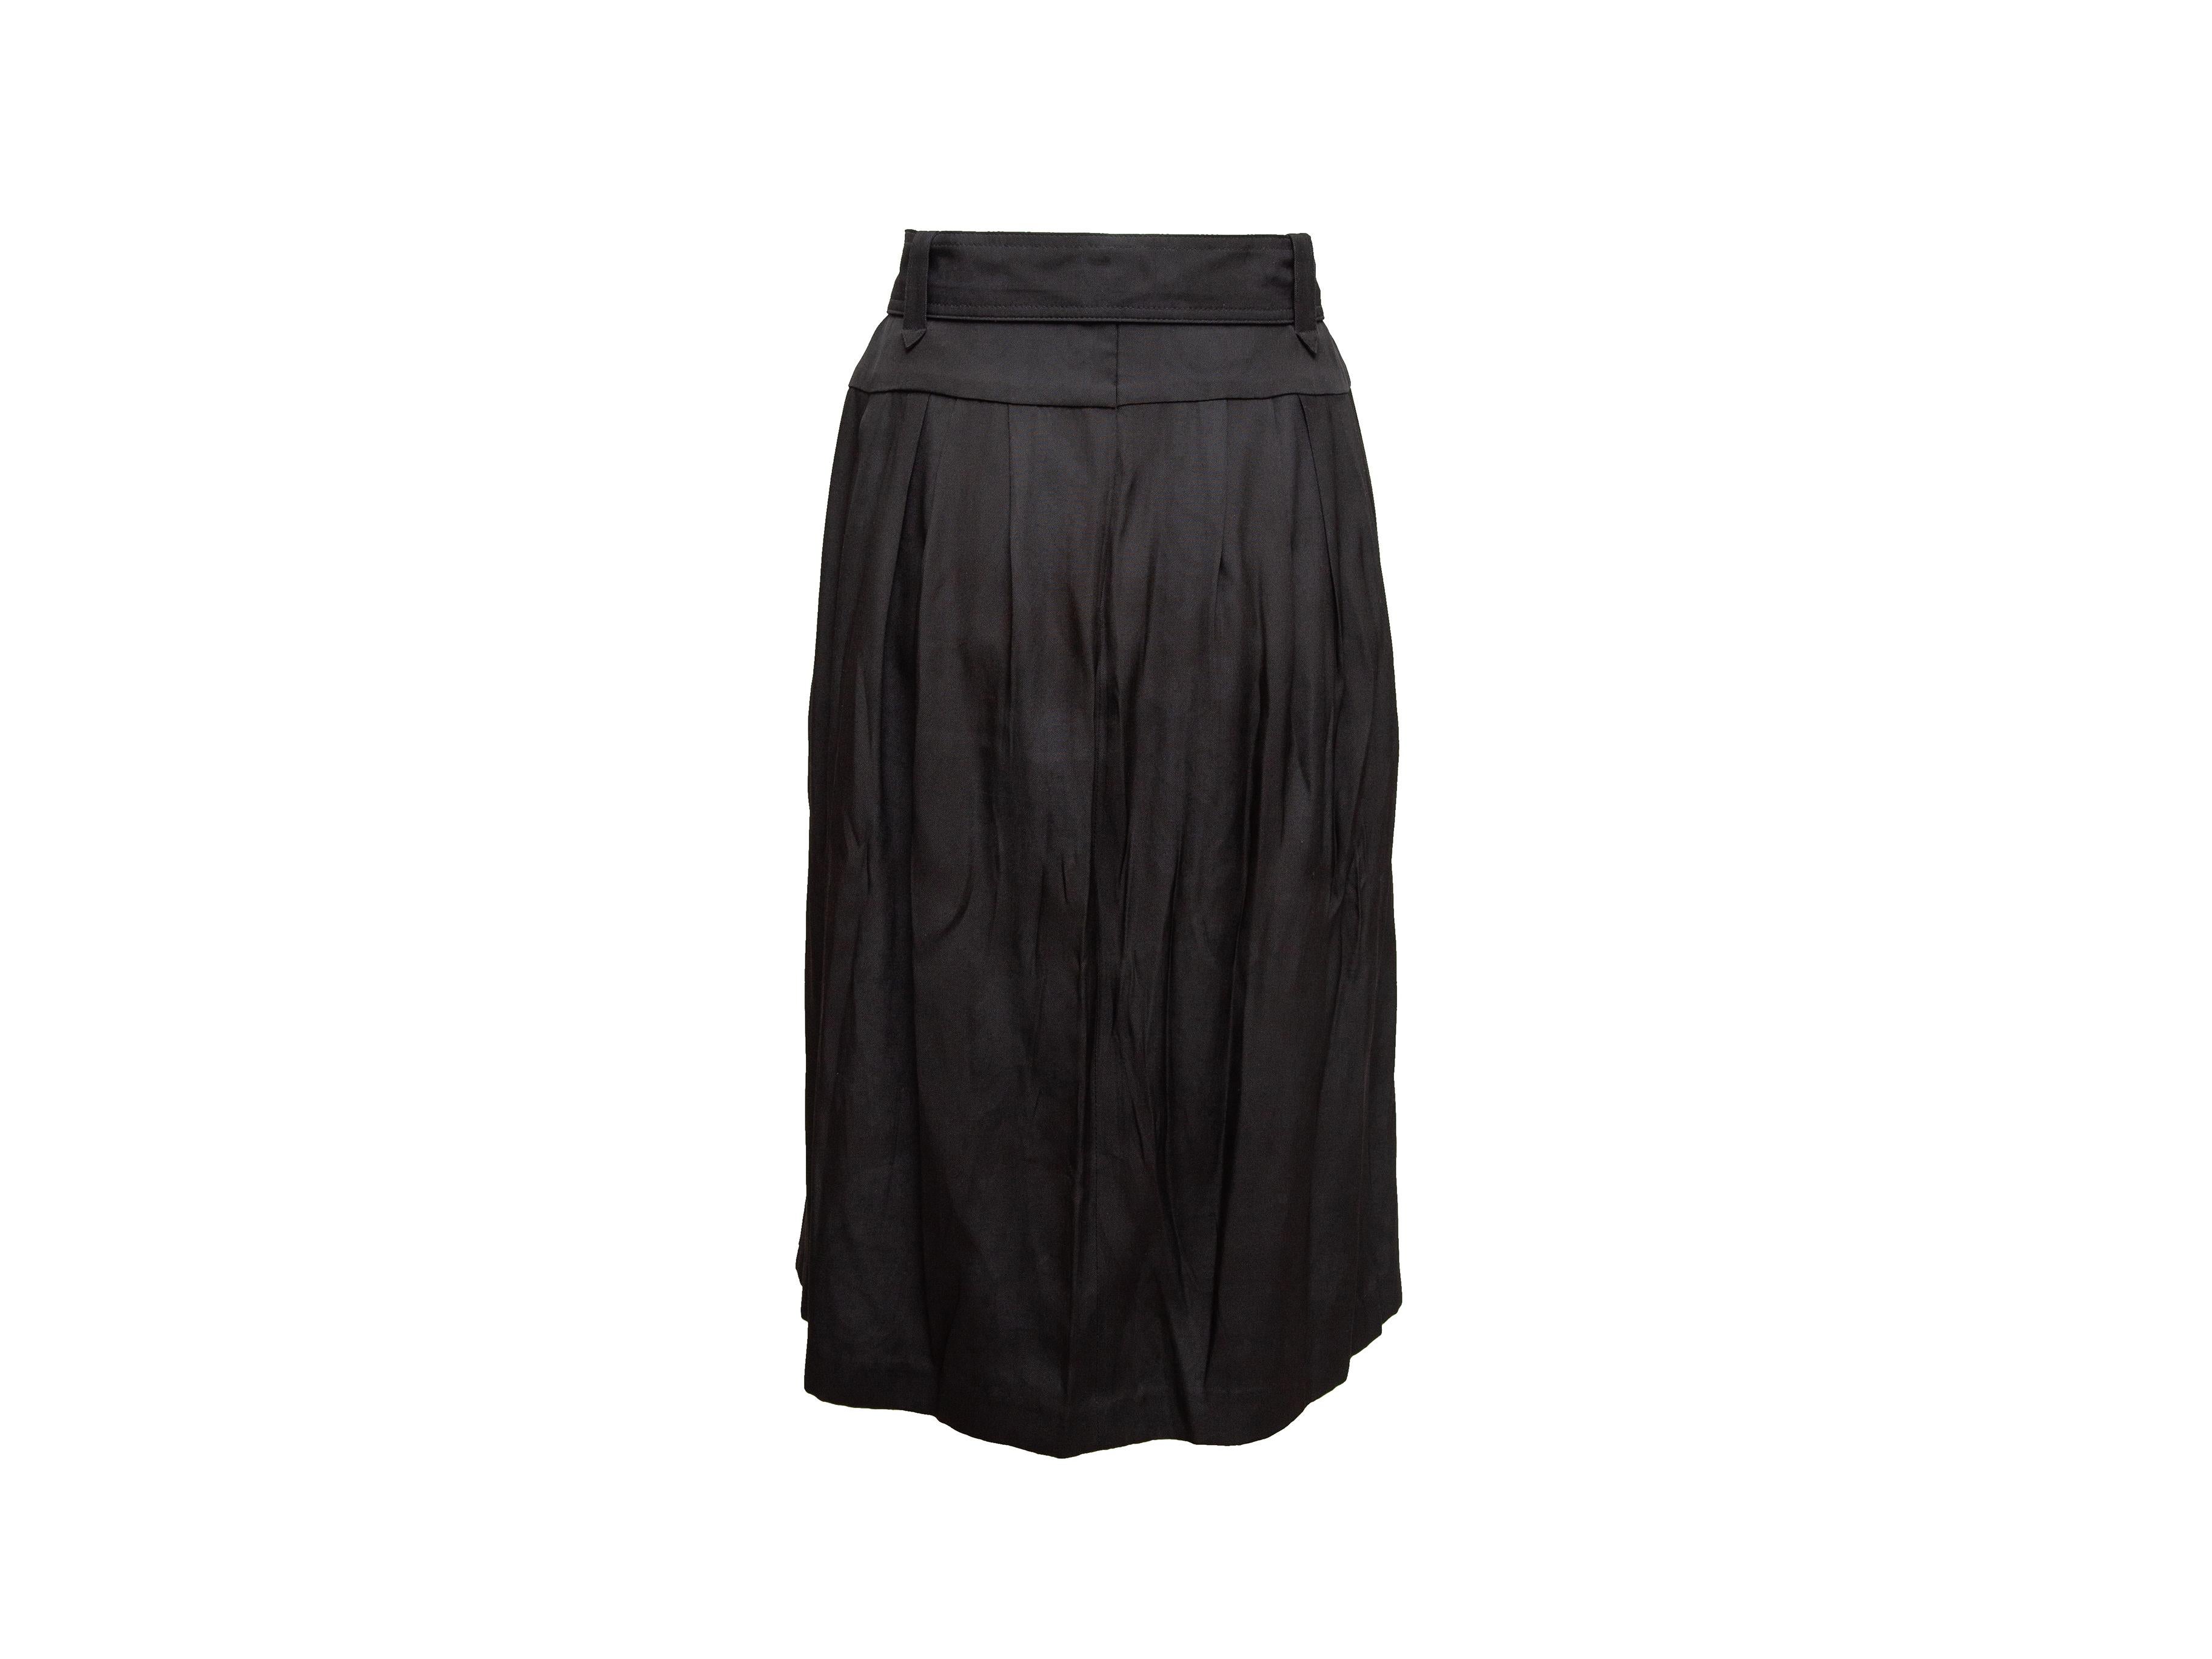 Product details: Black silk-blend skirt by Dries Van Noten. Belt accent at waist. Designer size 42. 32